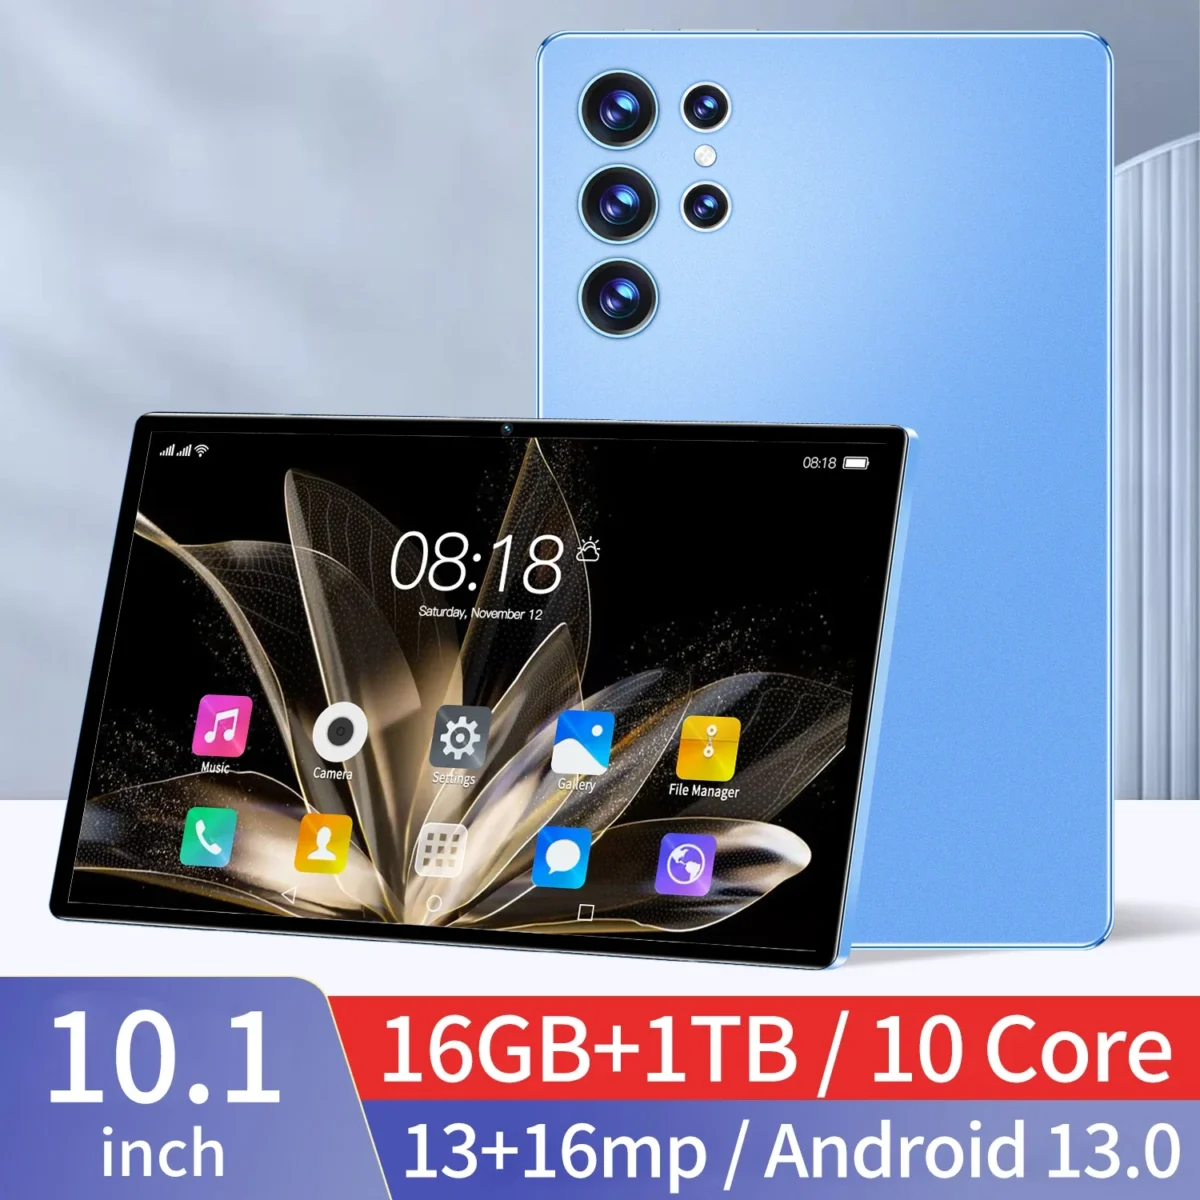 VASOUN Android 13 Tablet 10.1, 12GB(6+6 Expand) RAM, 128GB ROM, Octa Core,  Dual